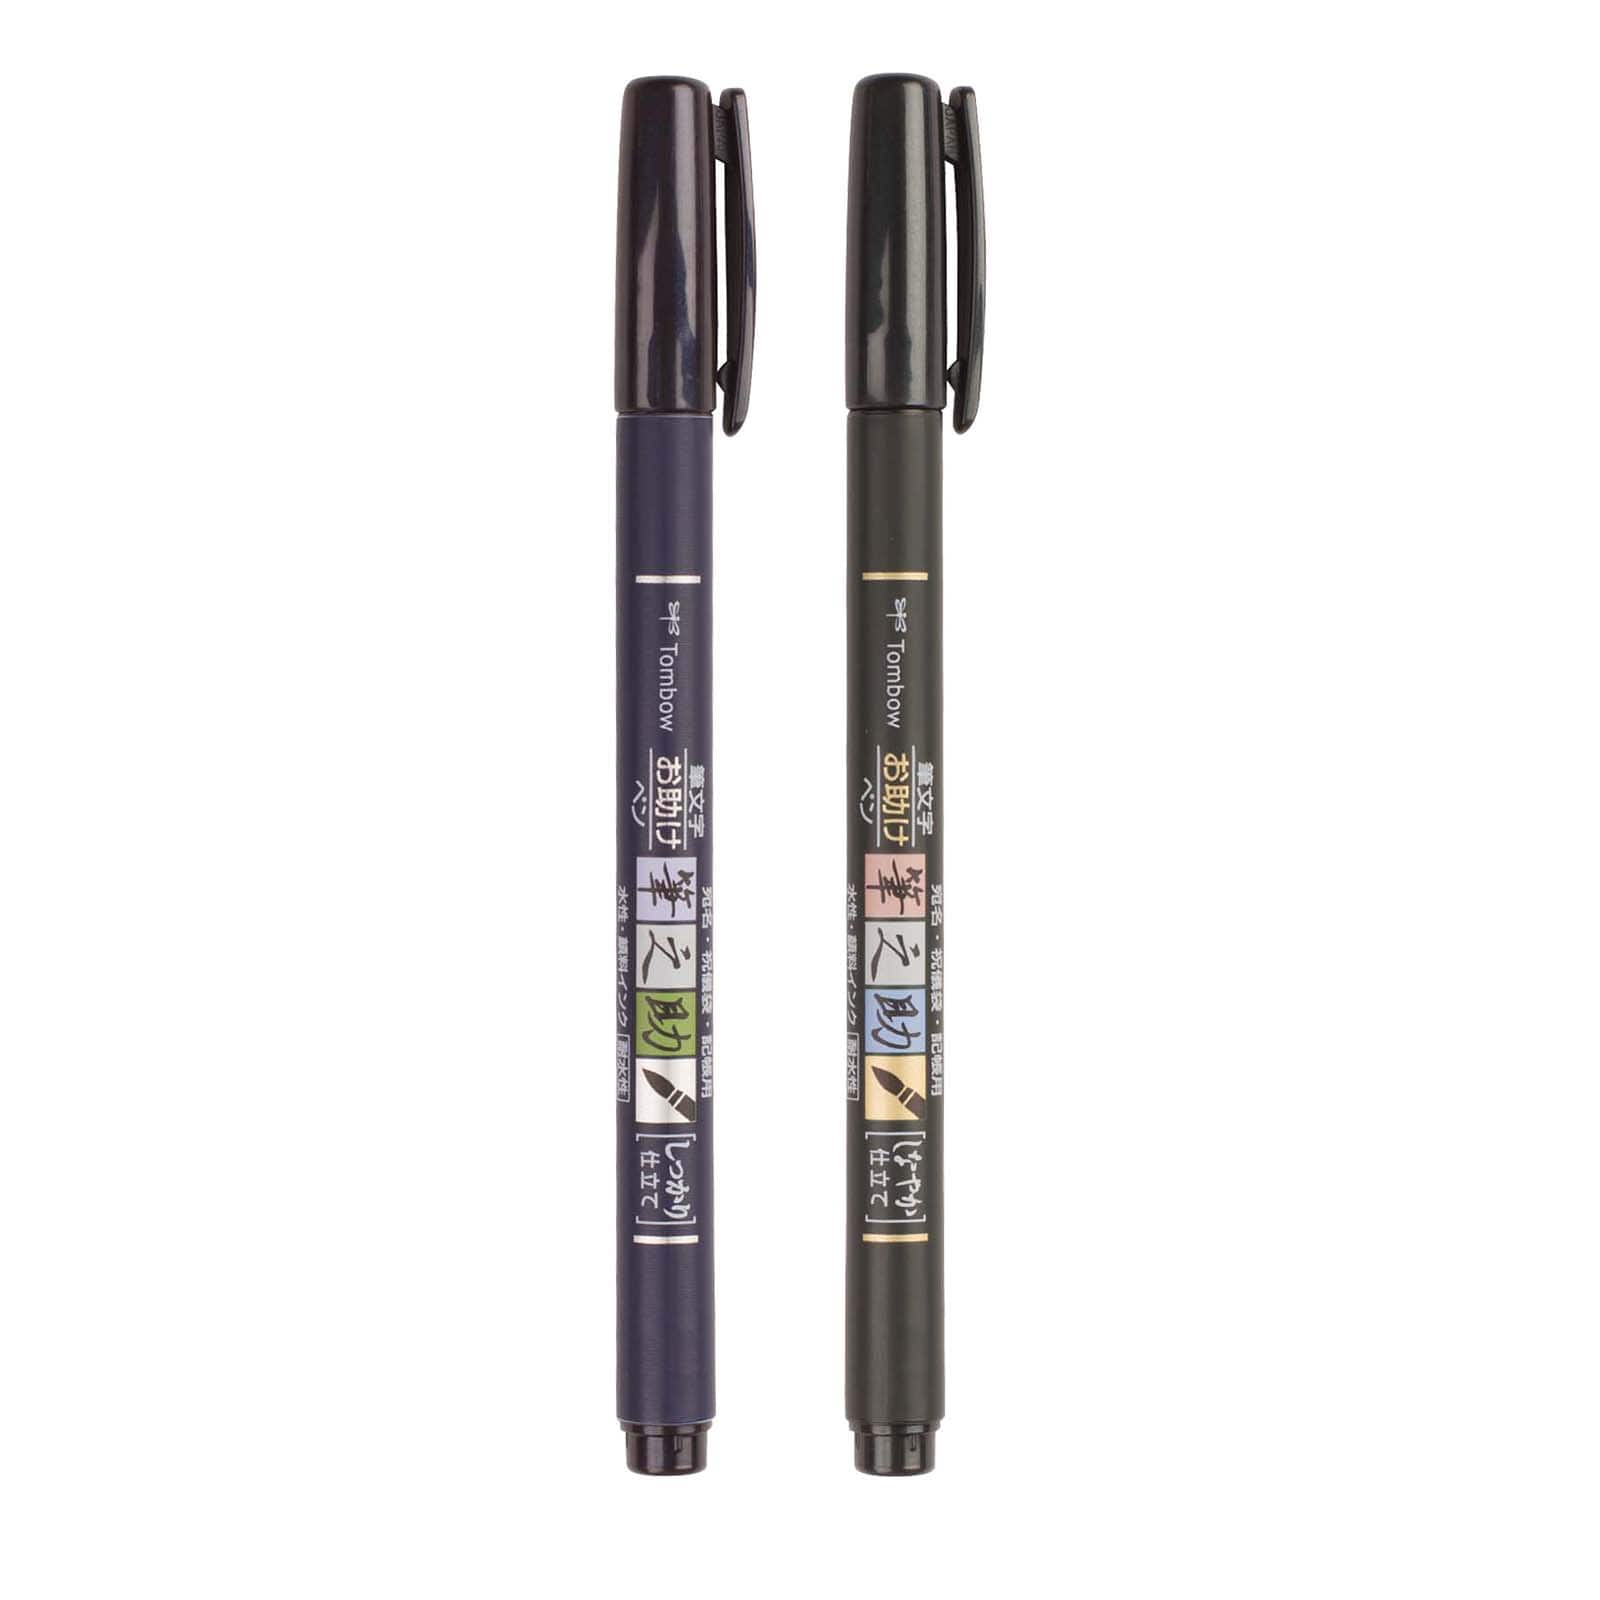 6 Packs: 2 ct. (12 total) Tombow Fudenosuke Calligraphy Brush Pens